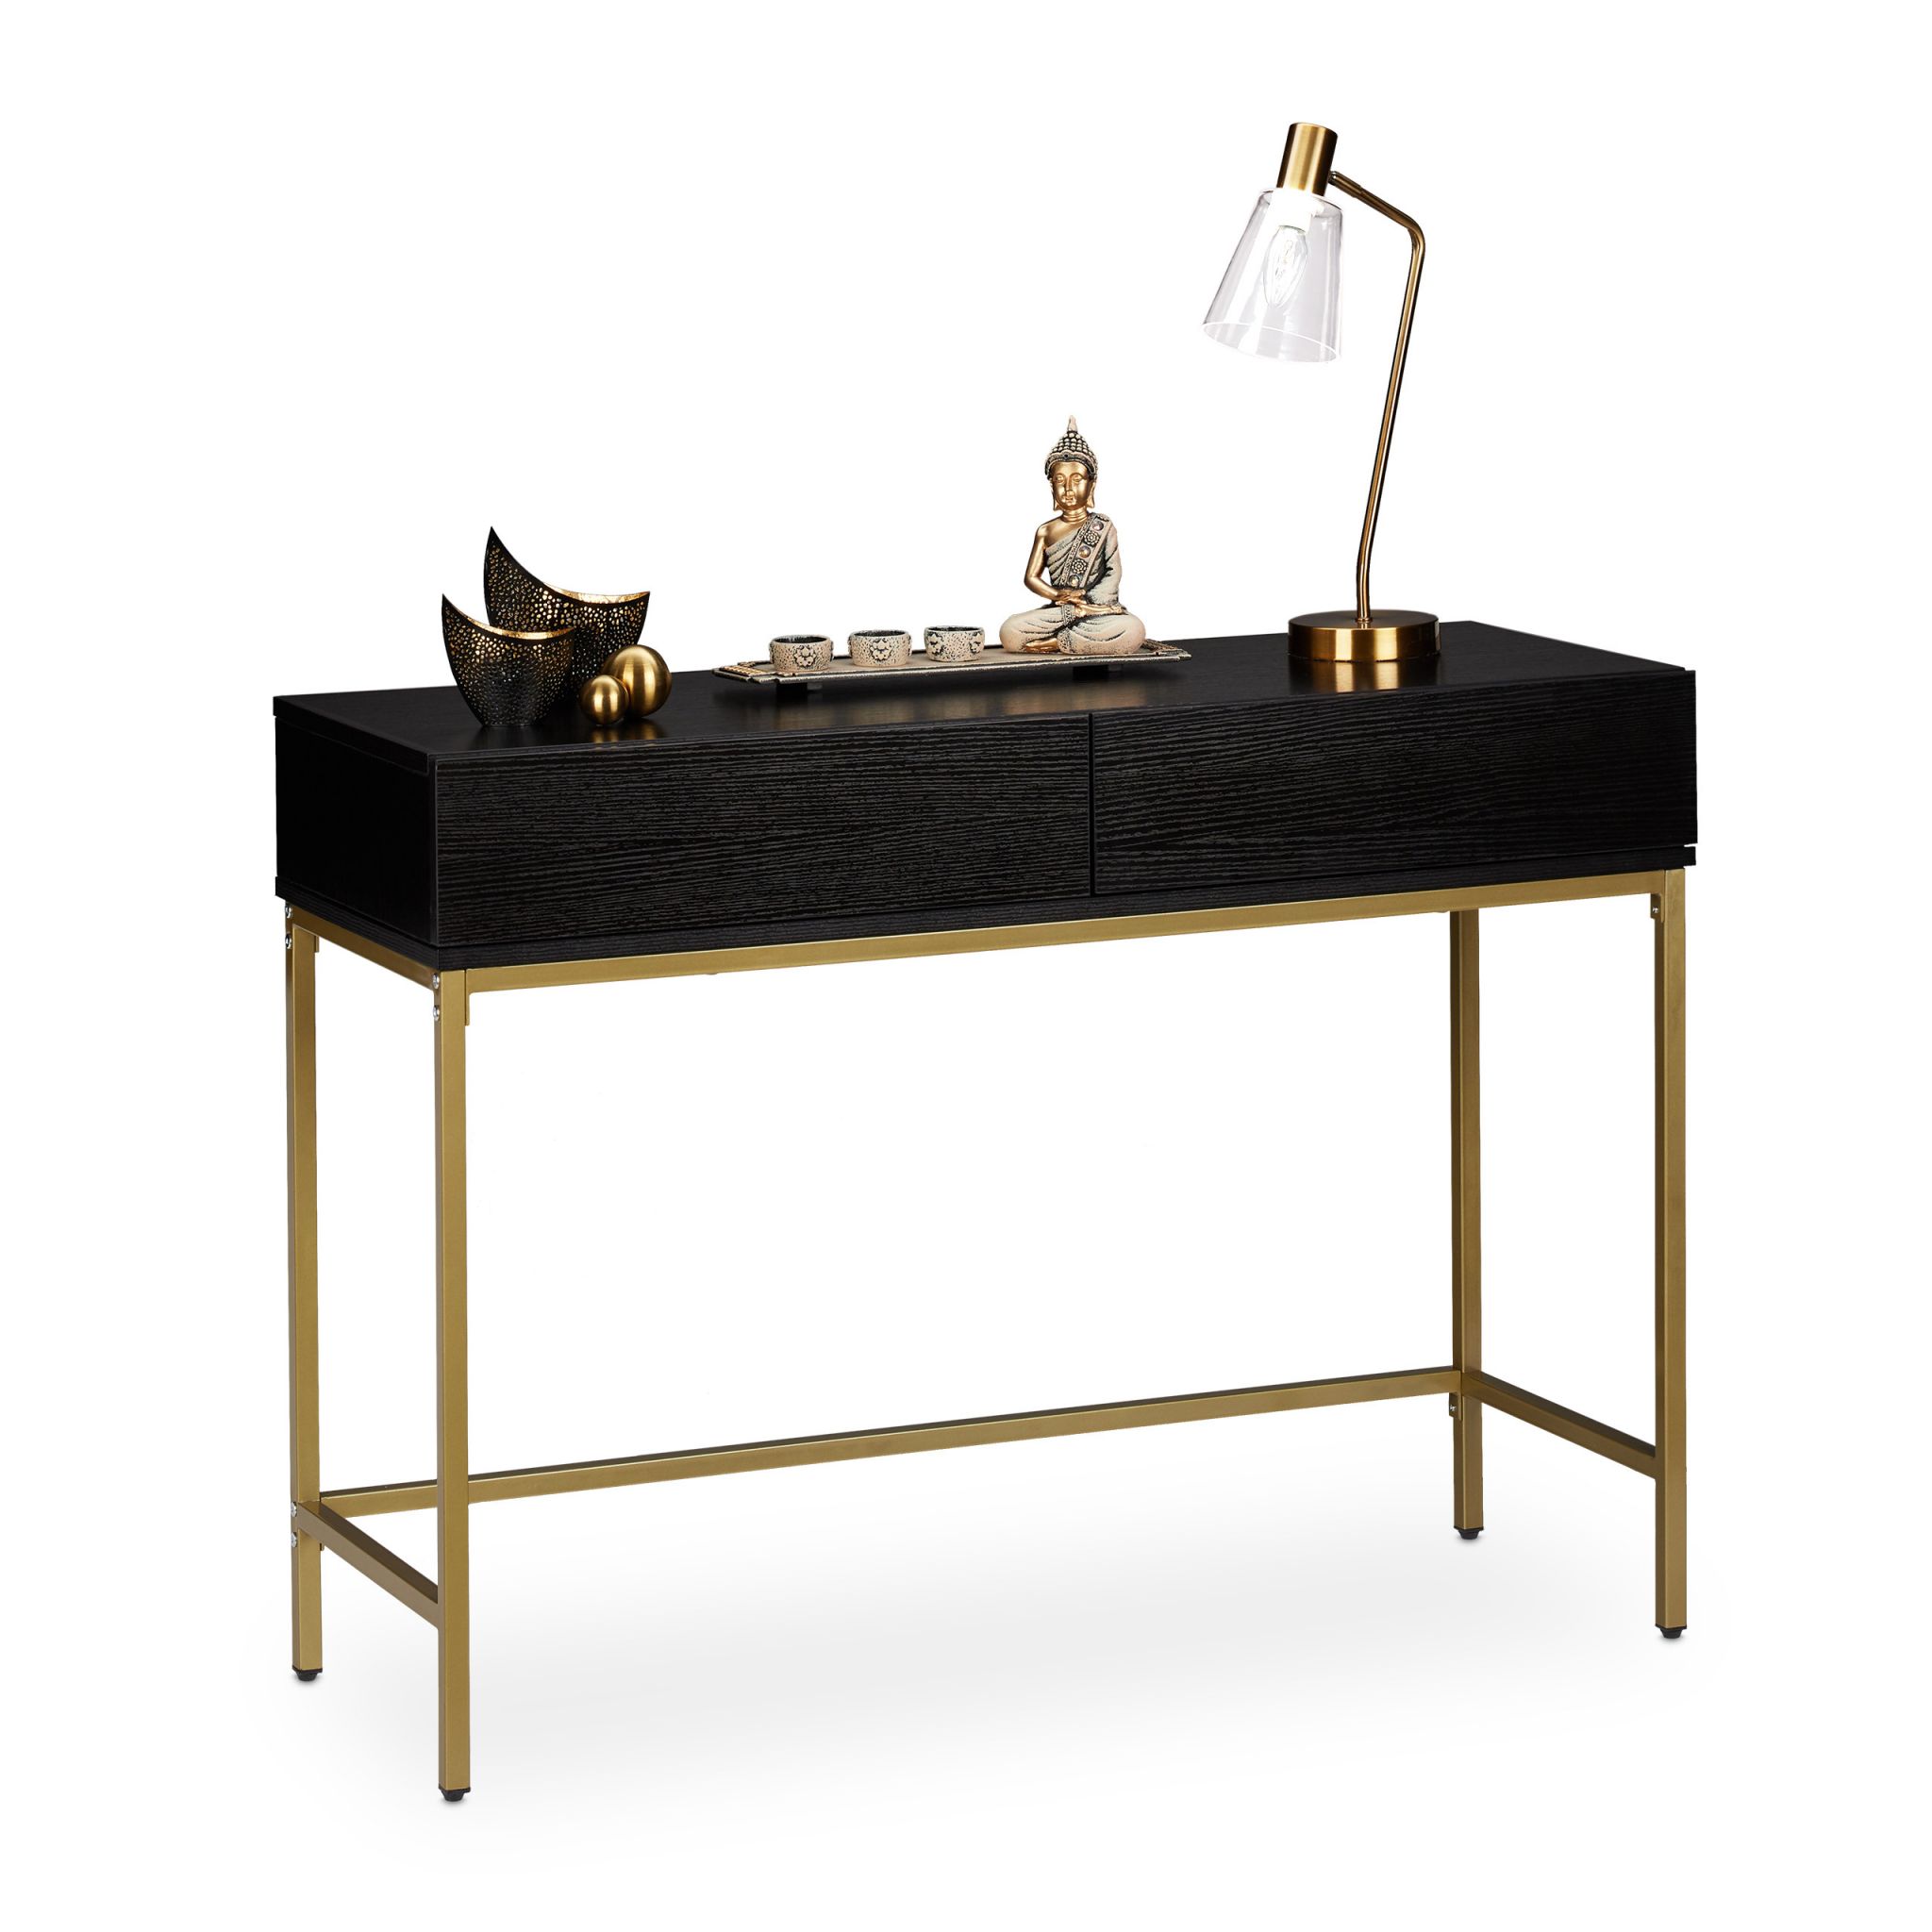 E-shop Konzolový stolík RD32594, čierno - zlatá